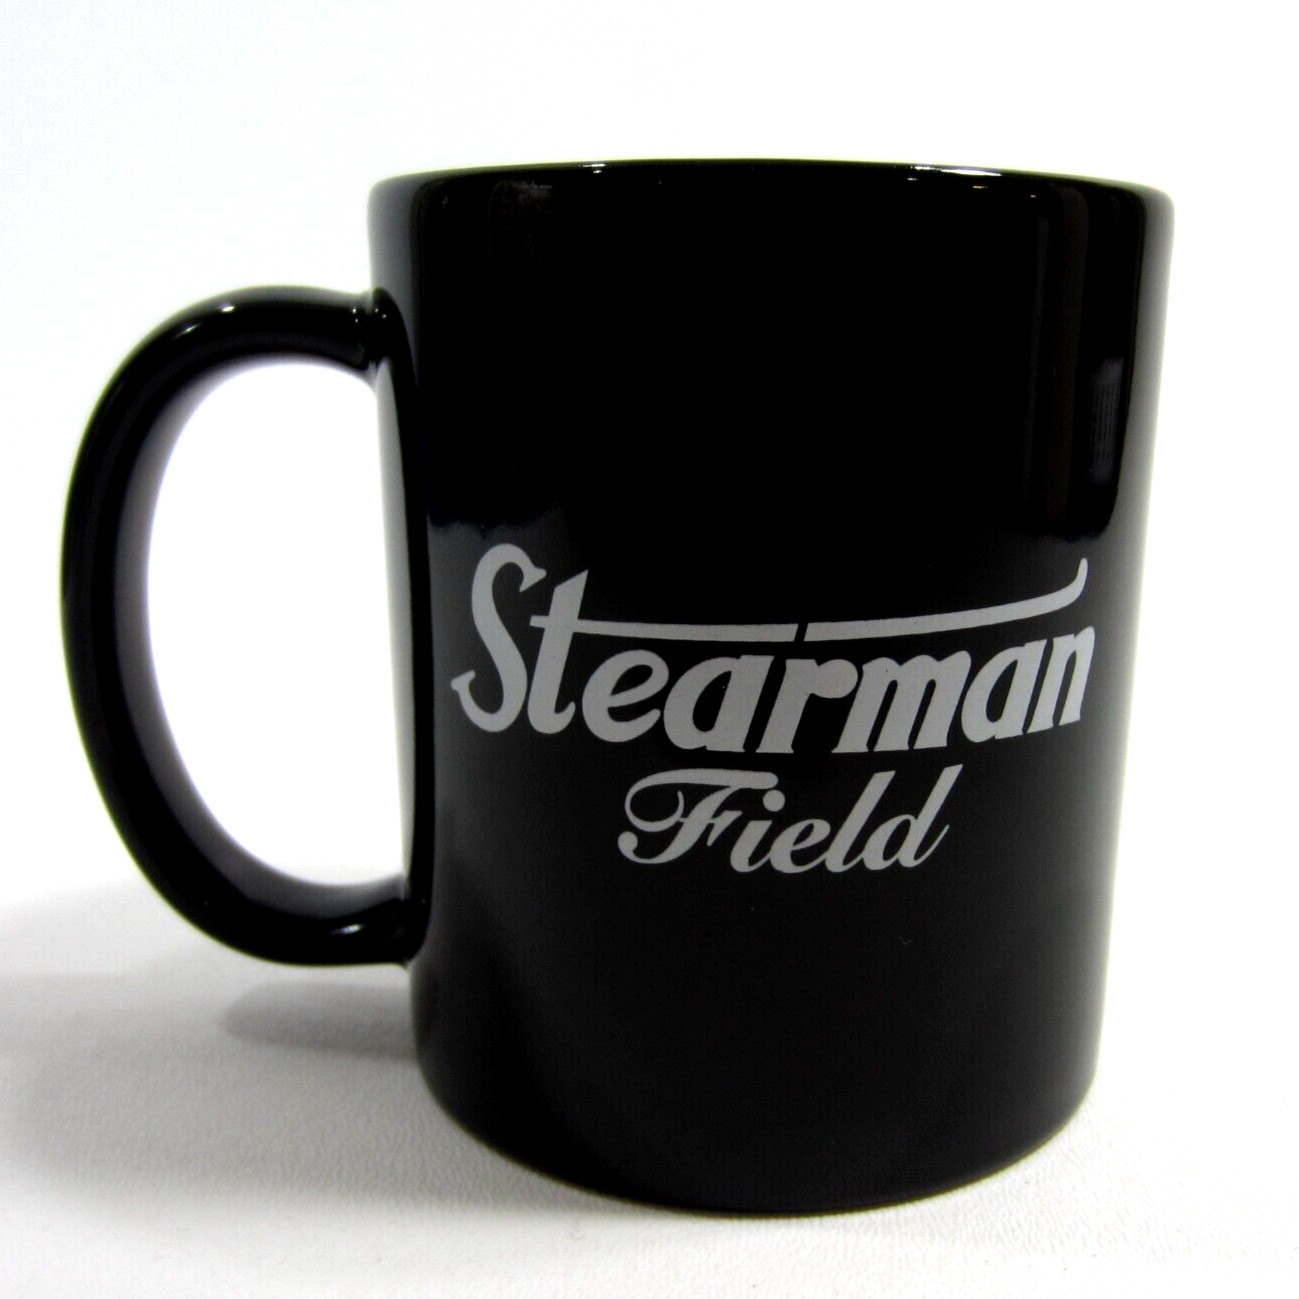 Stearman Field - Hardy Aviation Insurance Coffee Mug Cup - Aircraft